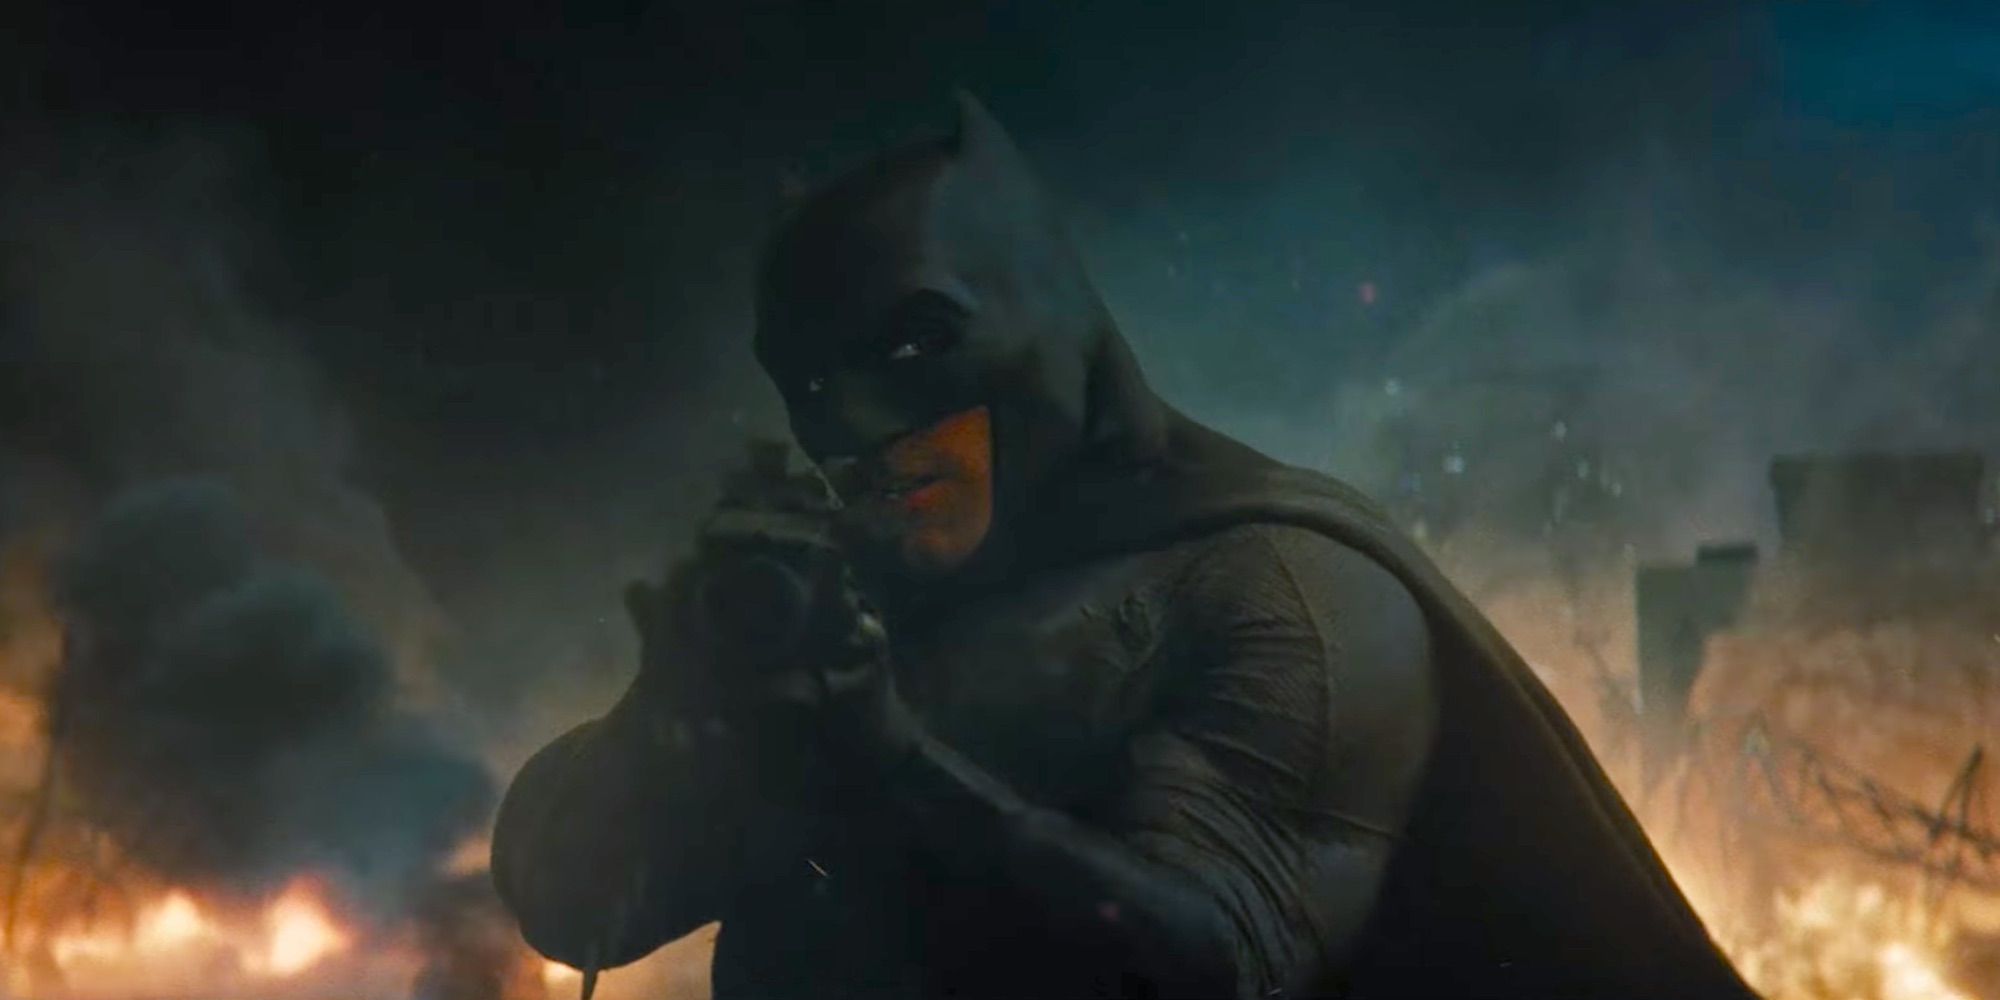 Batman using kryptonite gun in Batman v Superman 